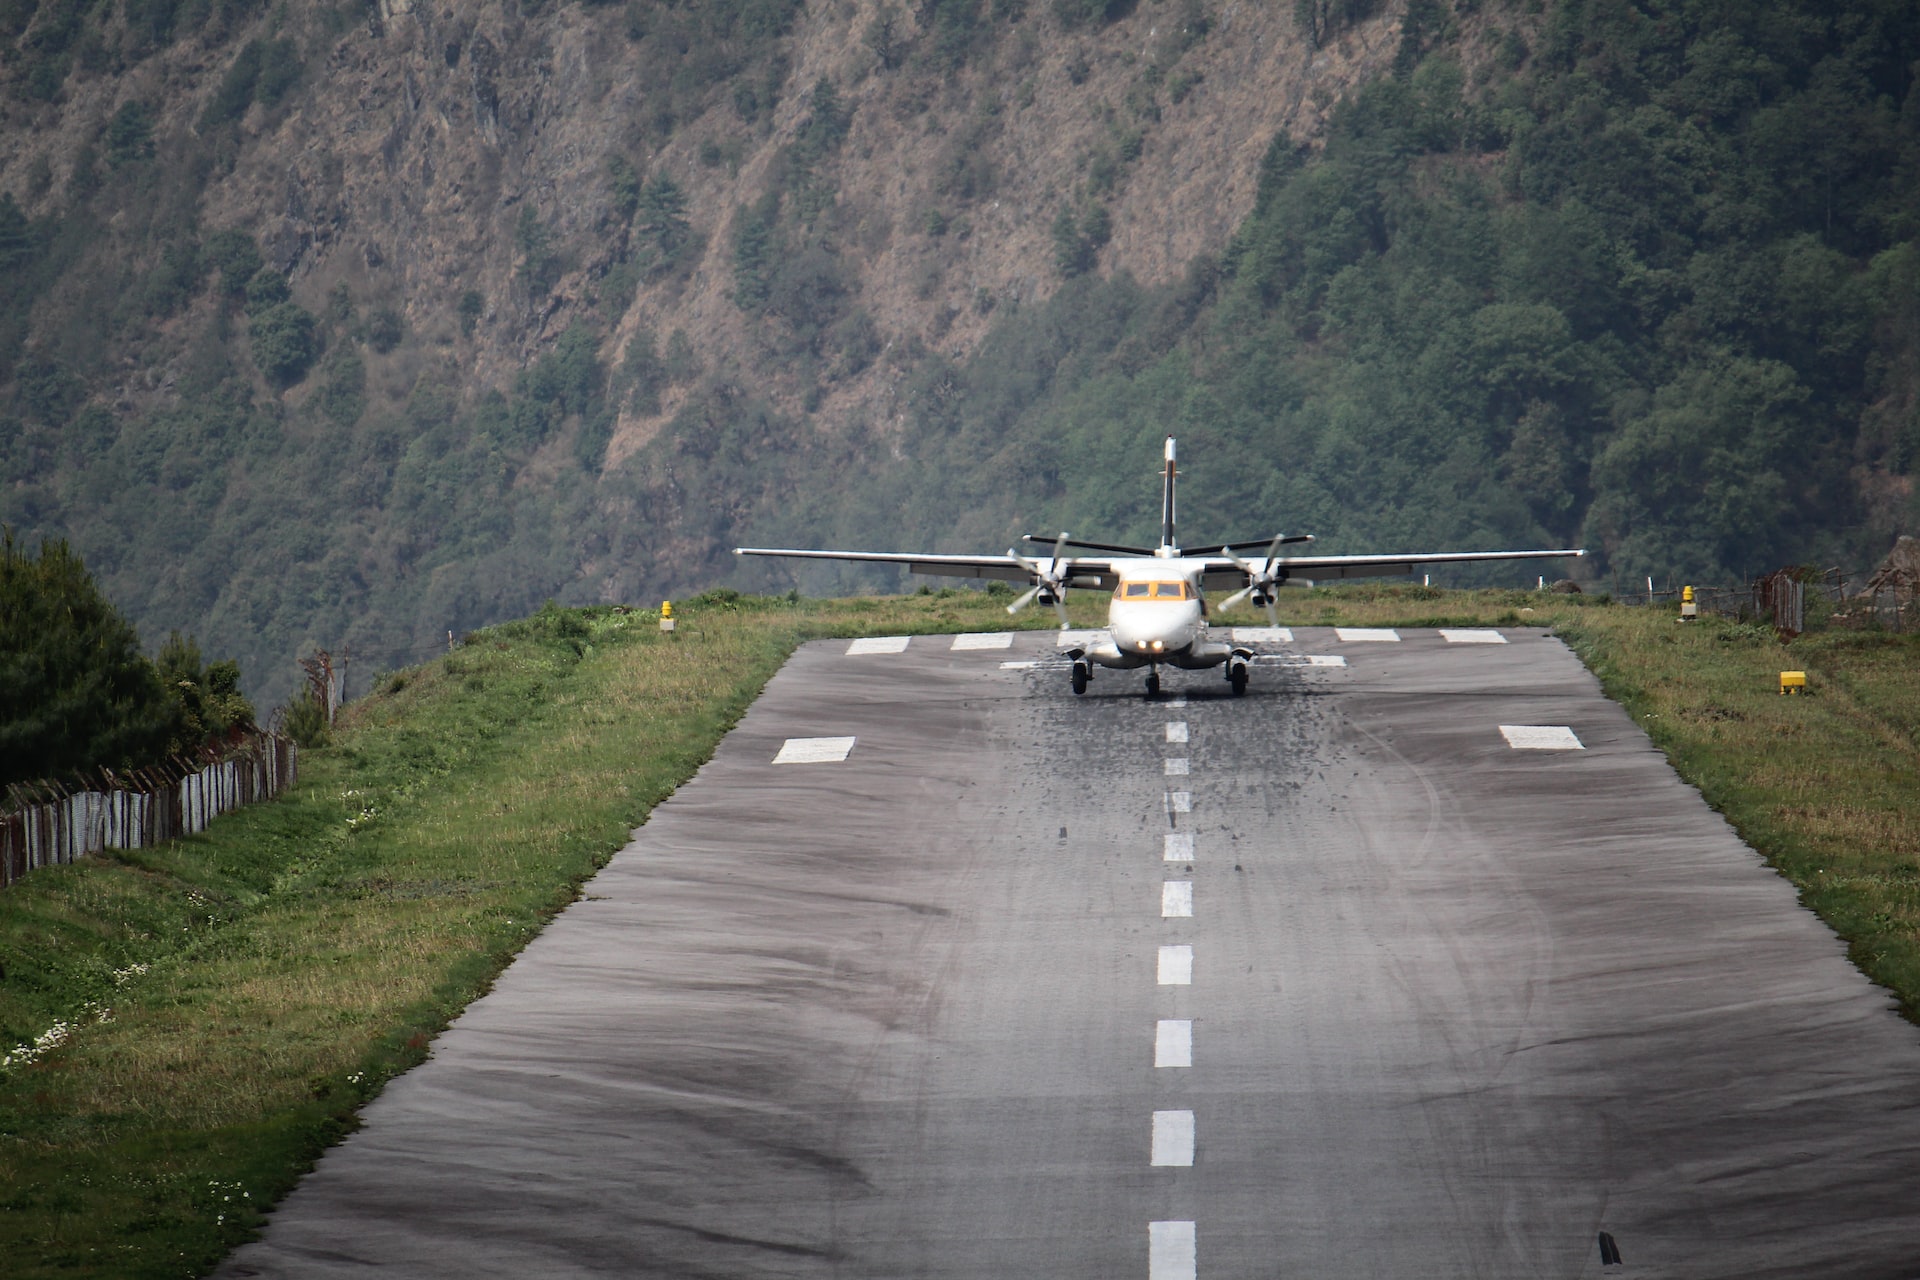 How Dangerous is Lukla Airport?- Airport near Mt. Everest